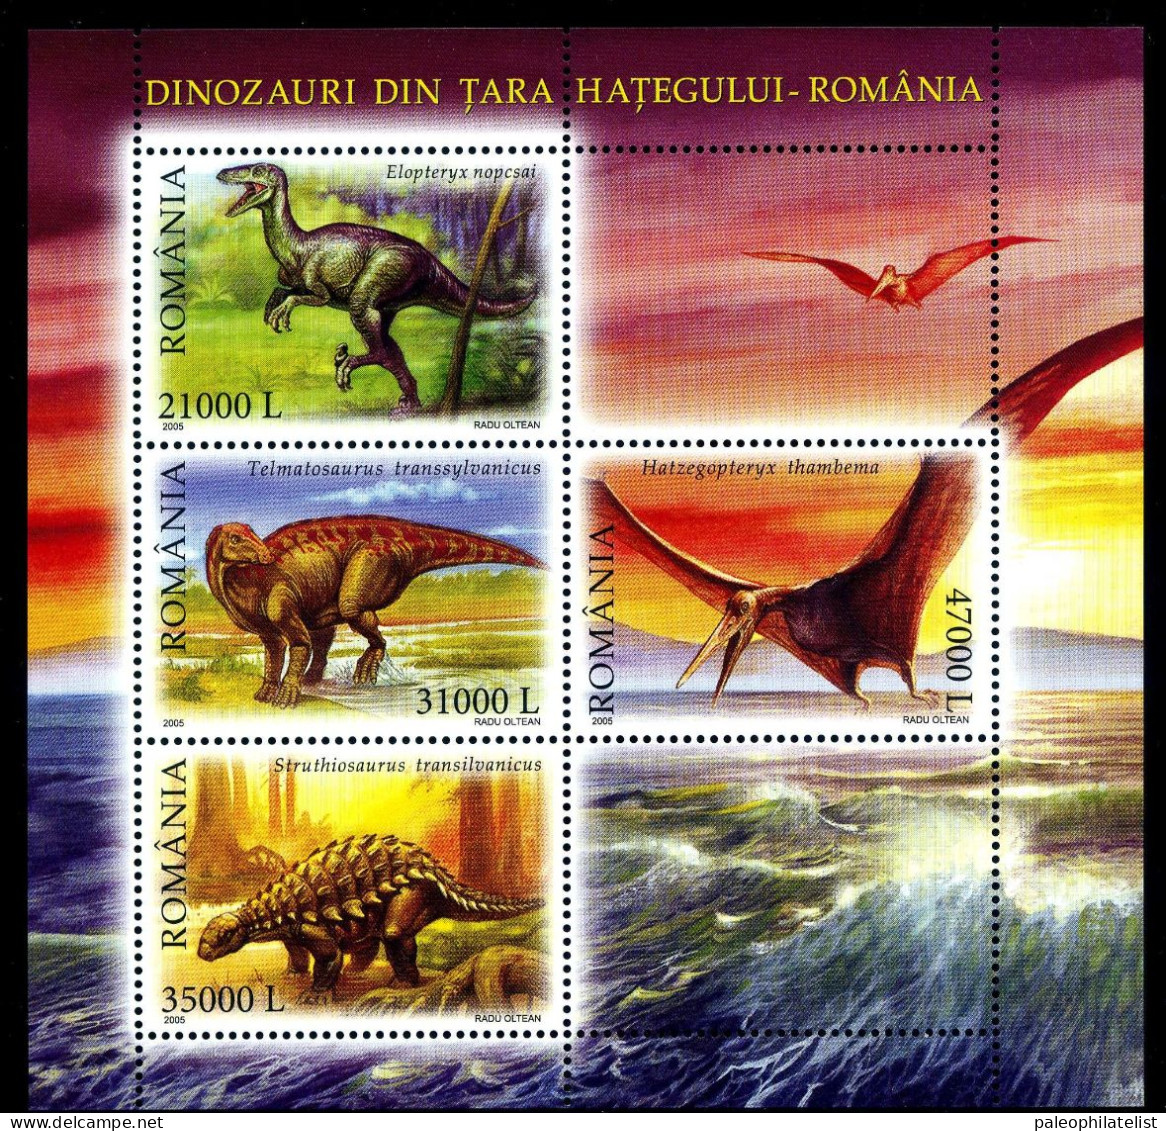 Romania  2005 "Dinosaurs From Tara Hategului - Romania", Prehistoric Animals,  Dinosaurs - Prehistorics